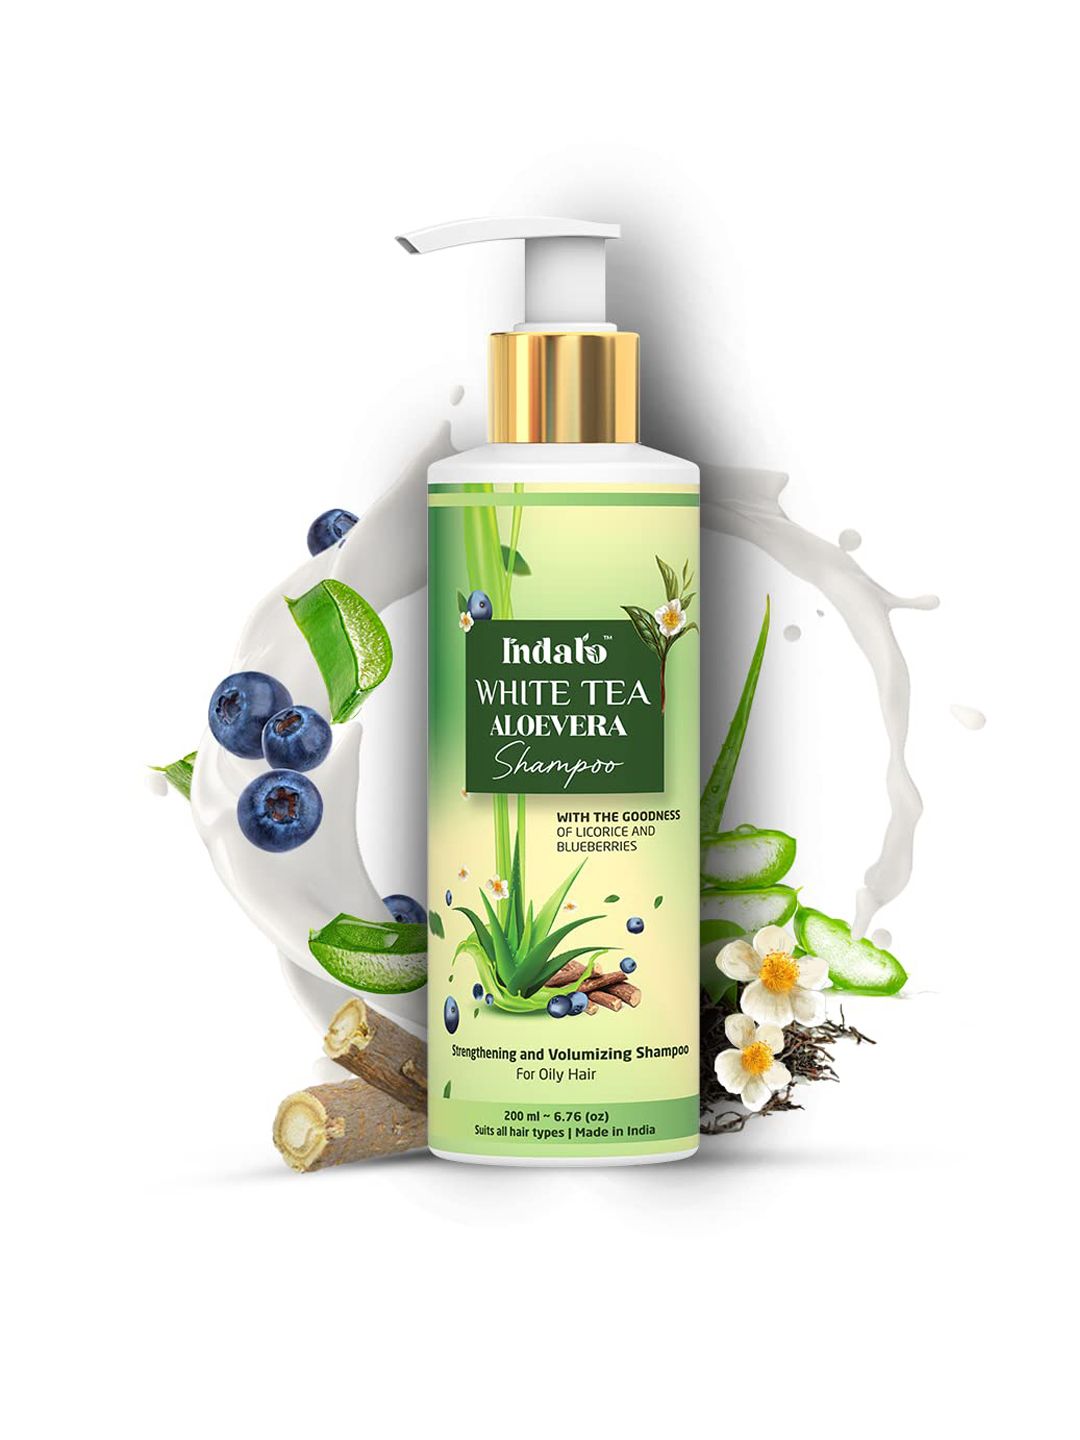 INDALO White Tea Aloe Vera Shampoo with Licorice & Blueberries for Oily Hair - 200ml Price in India